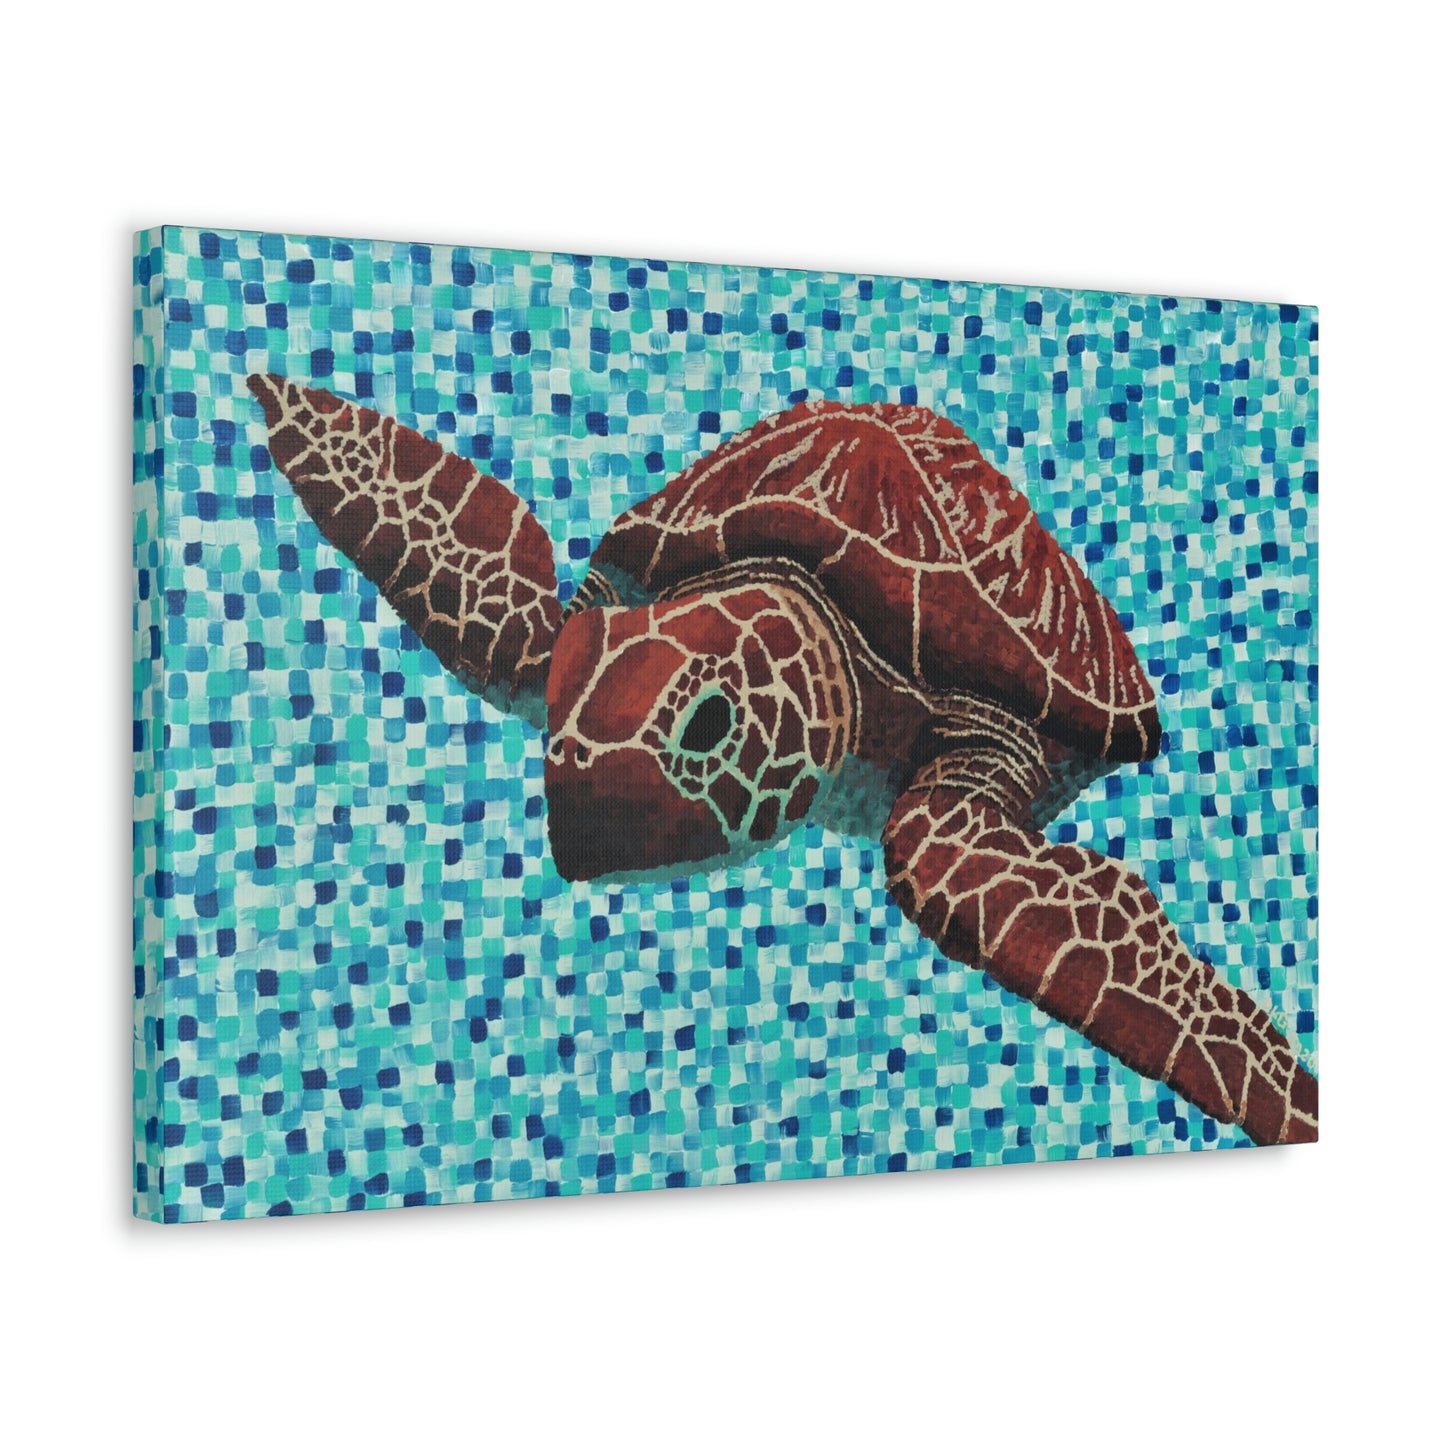 Sea Turtle 1 Canvas Print Dorrin Gingerich Art